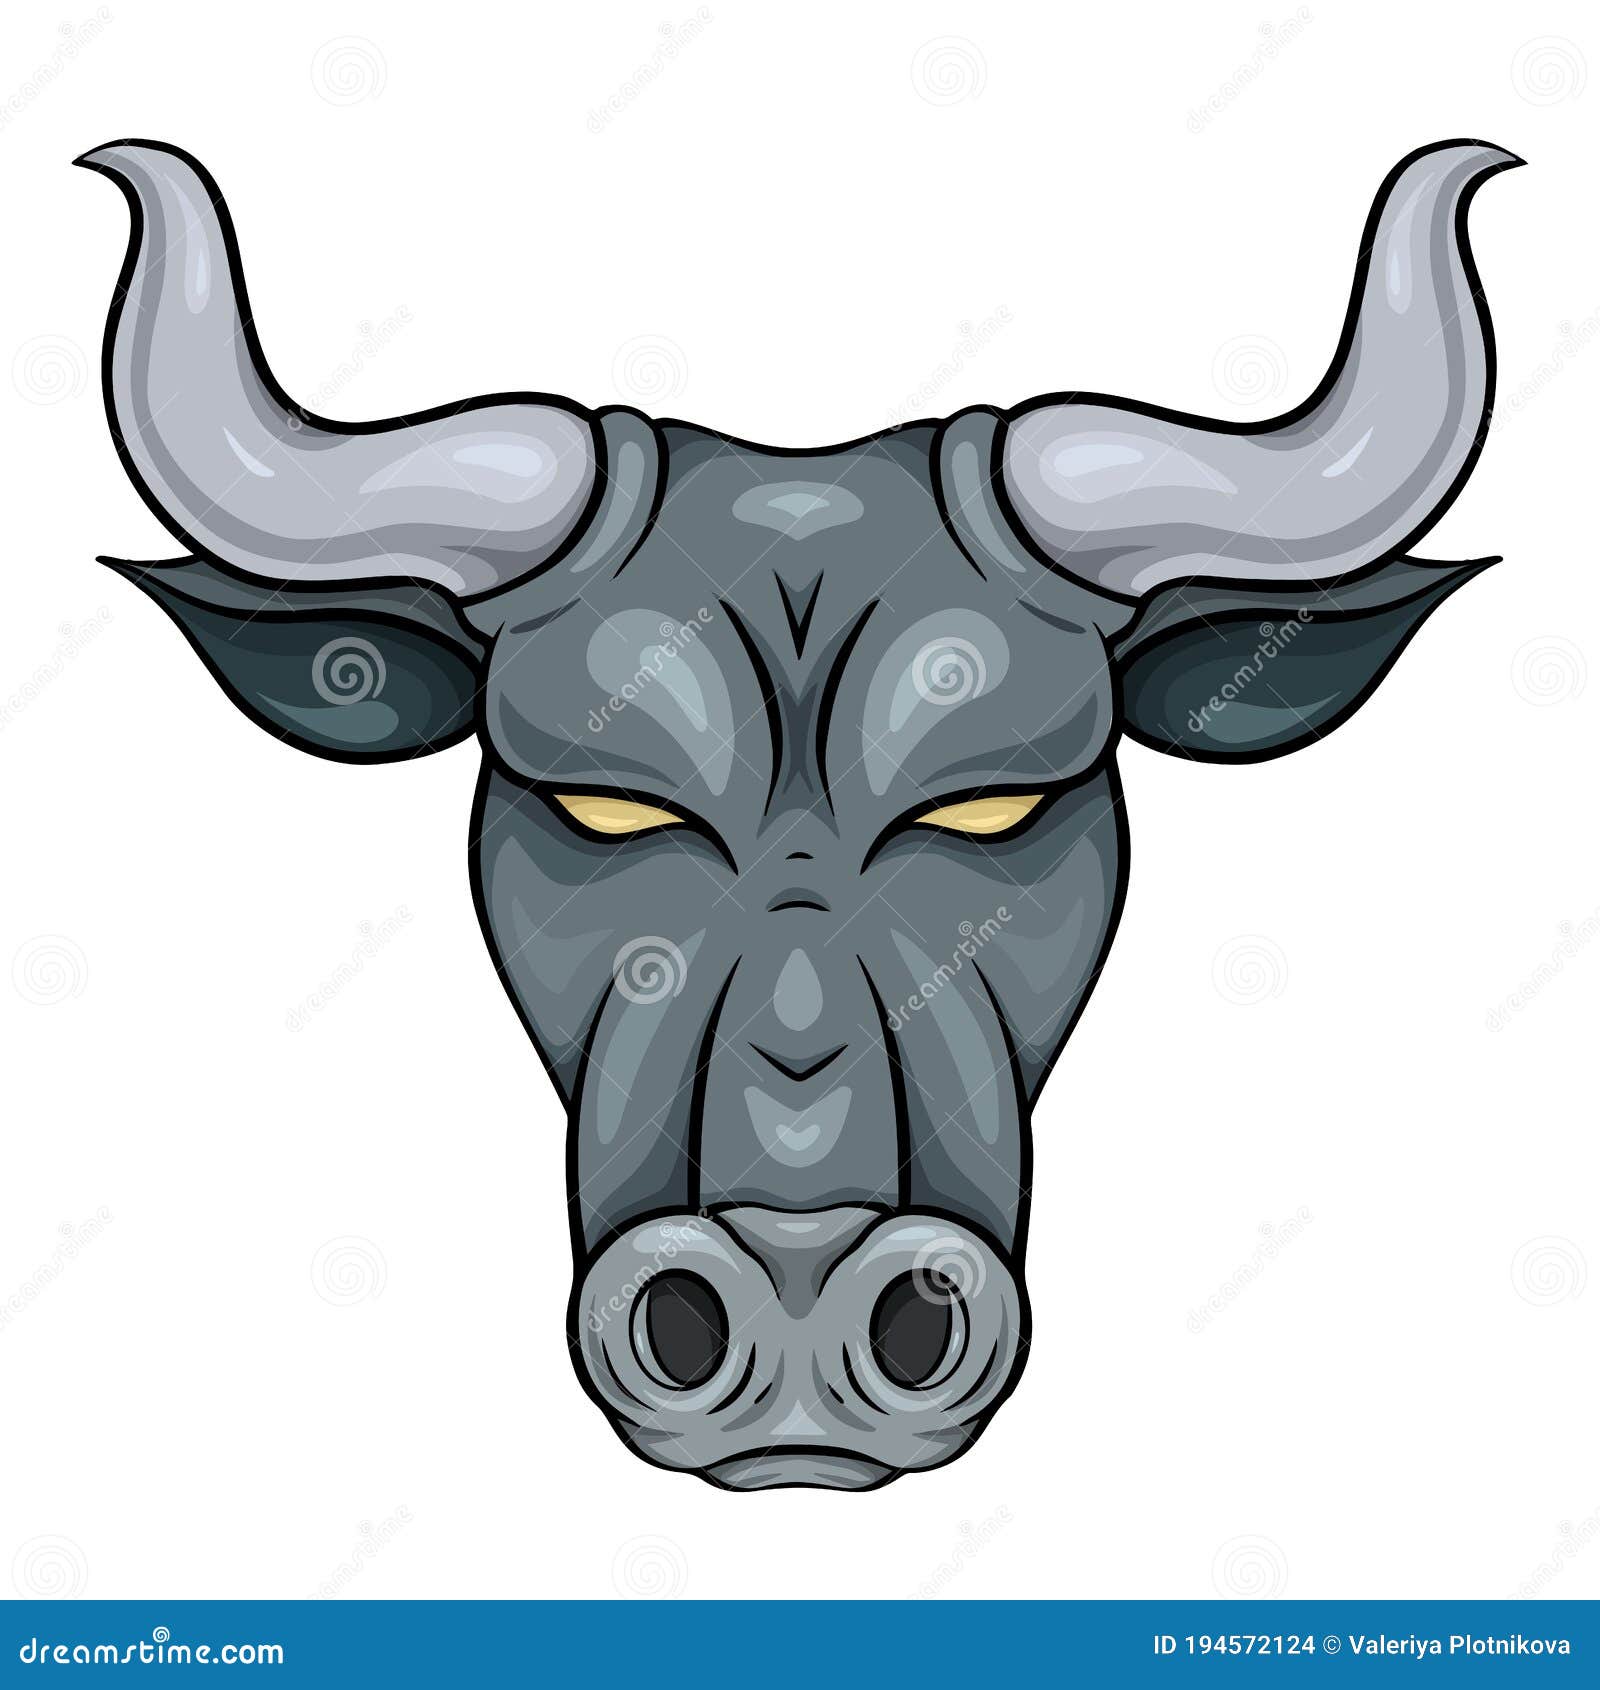 Bull Head Cartoon. the Symbol of the New Year 2021. Gray Metal Buffalo with  Horns Stock Vector - Illustration of horn, beast: 194572124